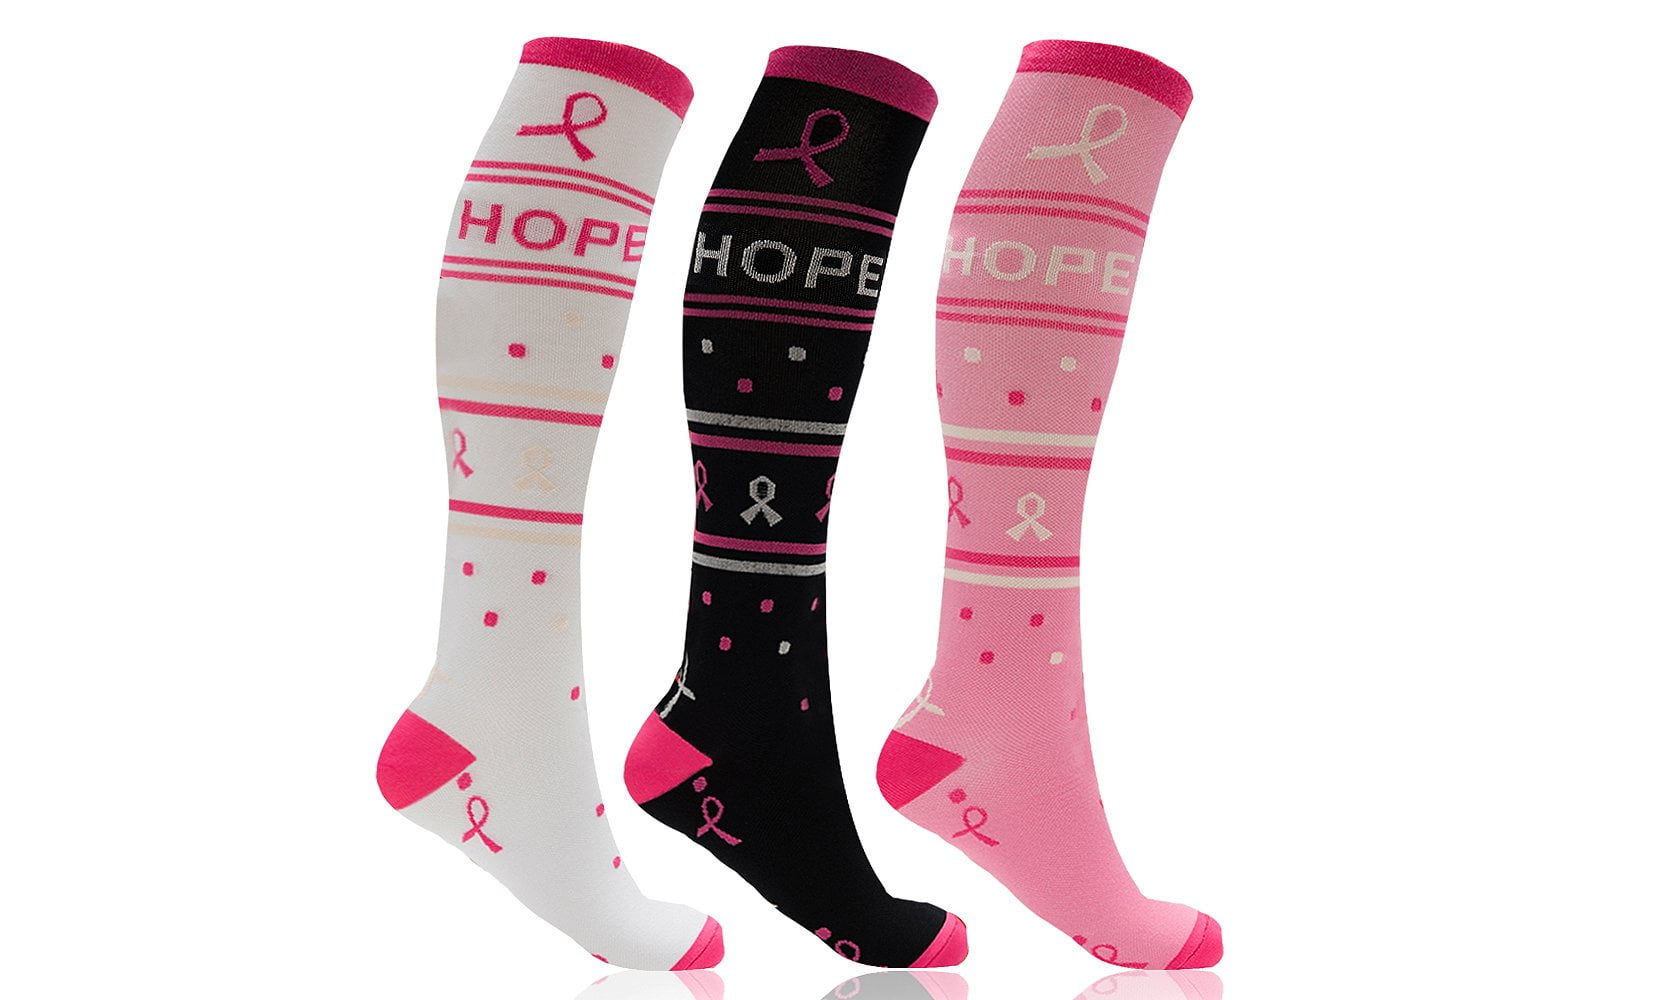 Women's Compression Socks White Black Pink Knit 8-15mmHg Compression Nurse Travel